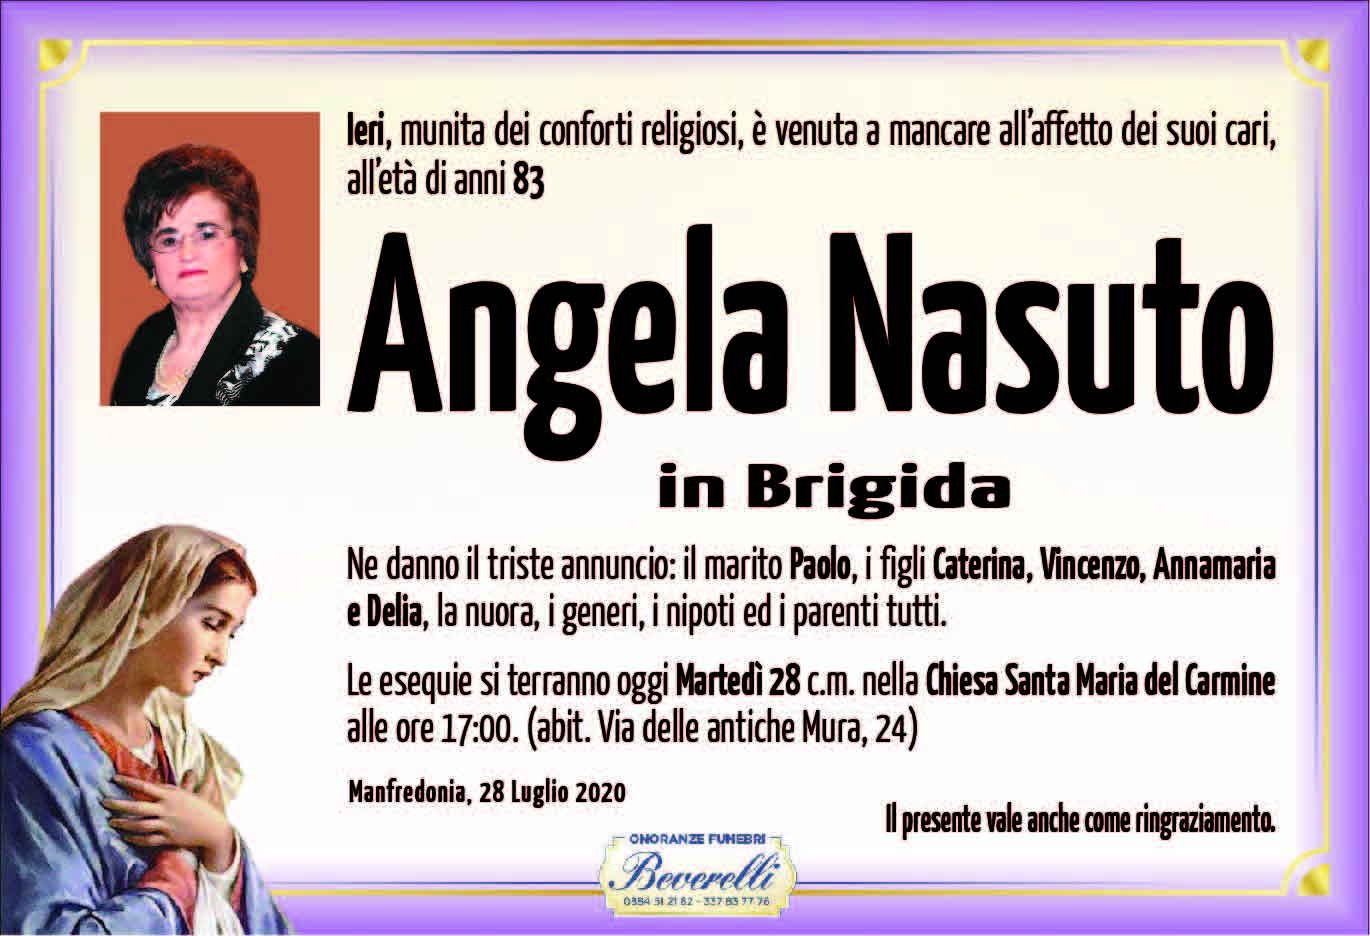 Angela Nasuto